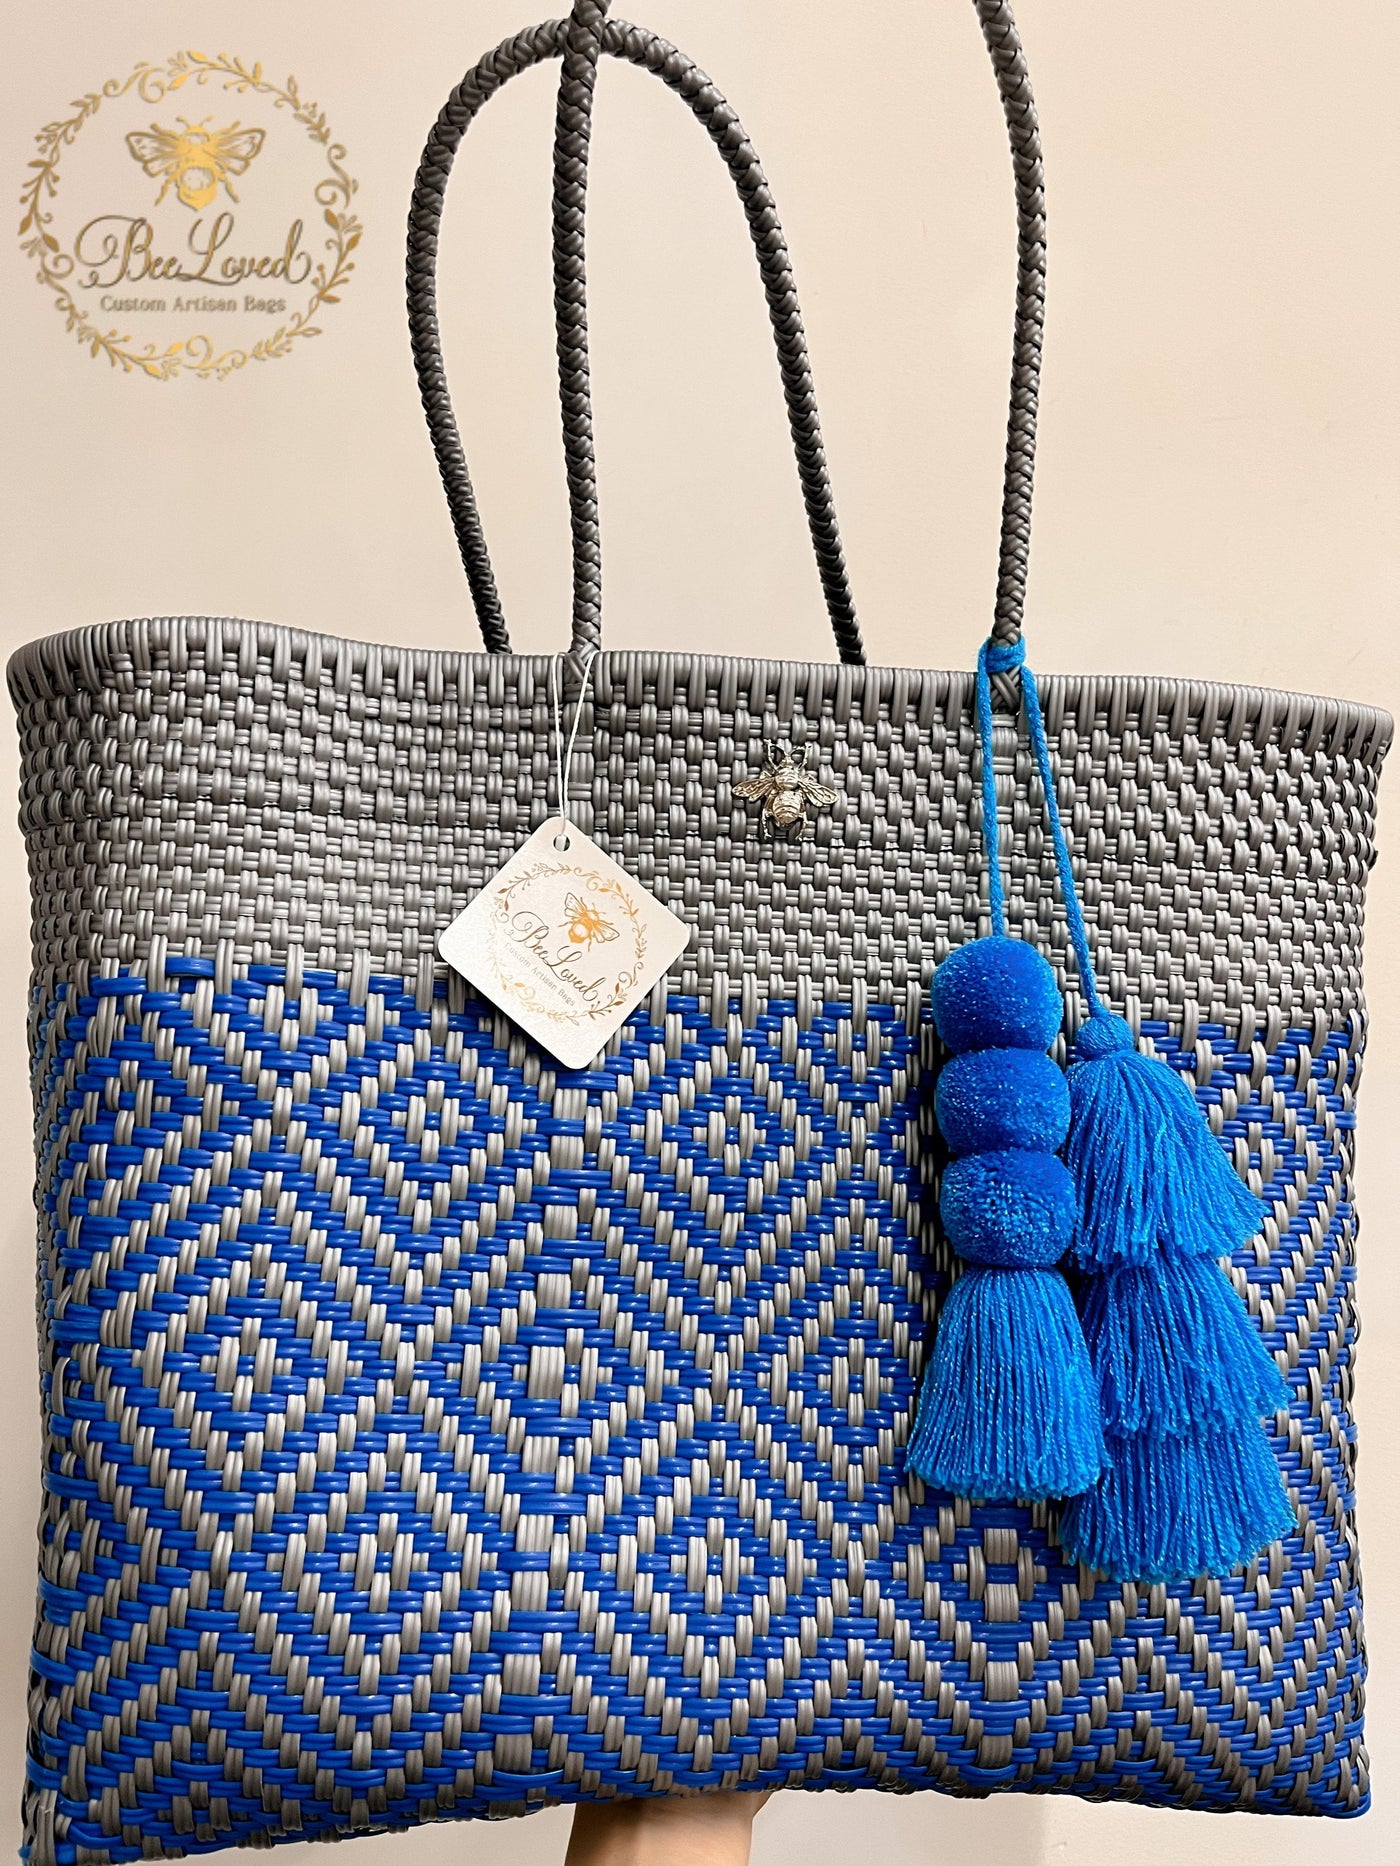 BeeLoved Custom Artisan Bags and Gifts Handbags XL Silver Seas Beech Bag